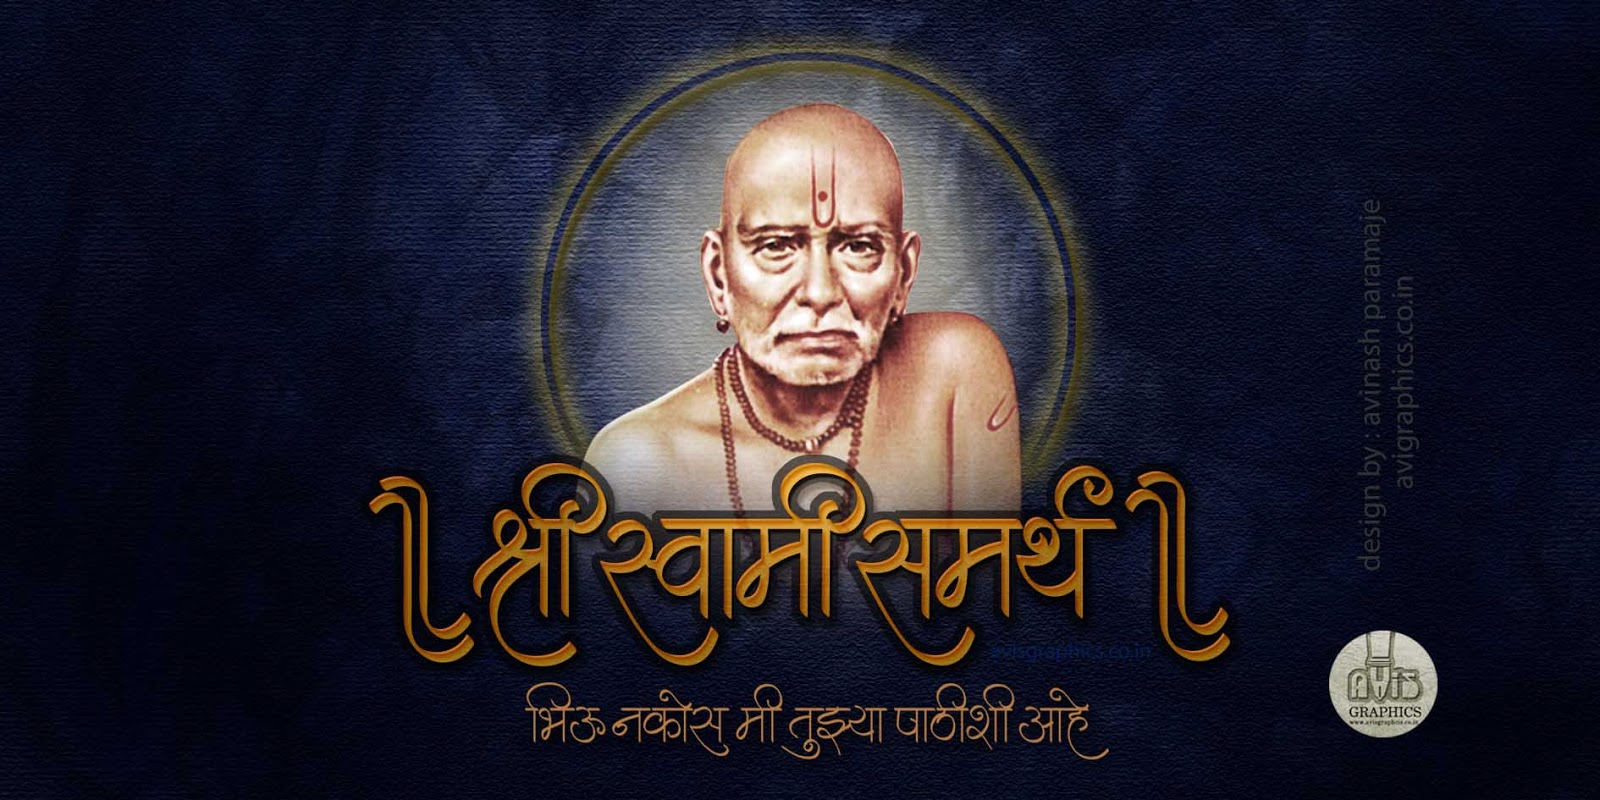 swami samarth wallpaper,text,font,photo caption,album cover,guru